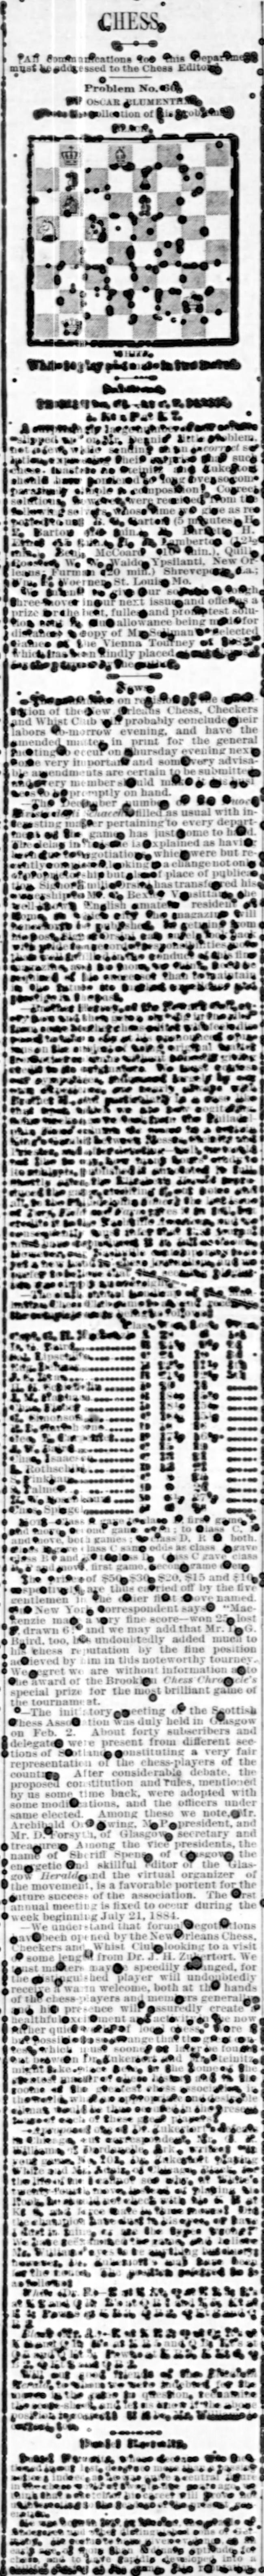 1884.03.02-01 New Orleans Times-Democrat.jpg